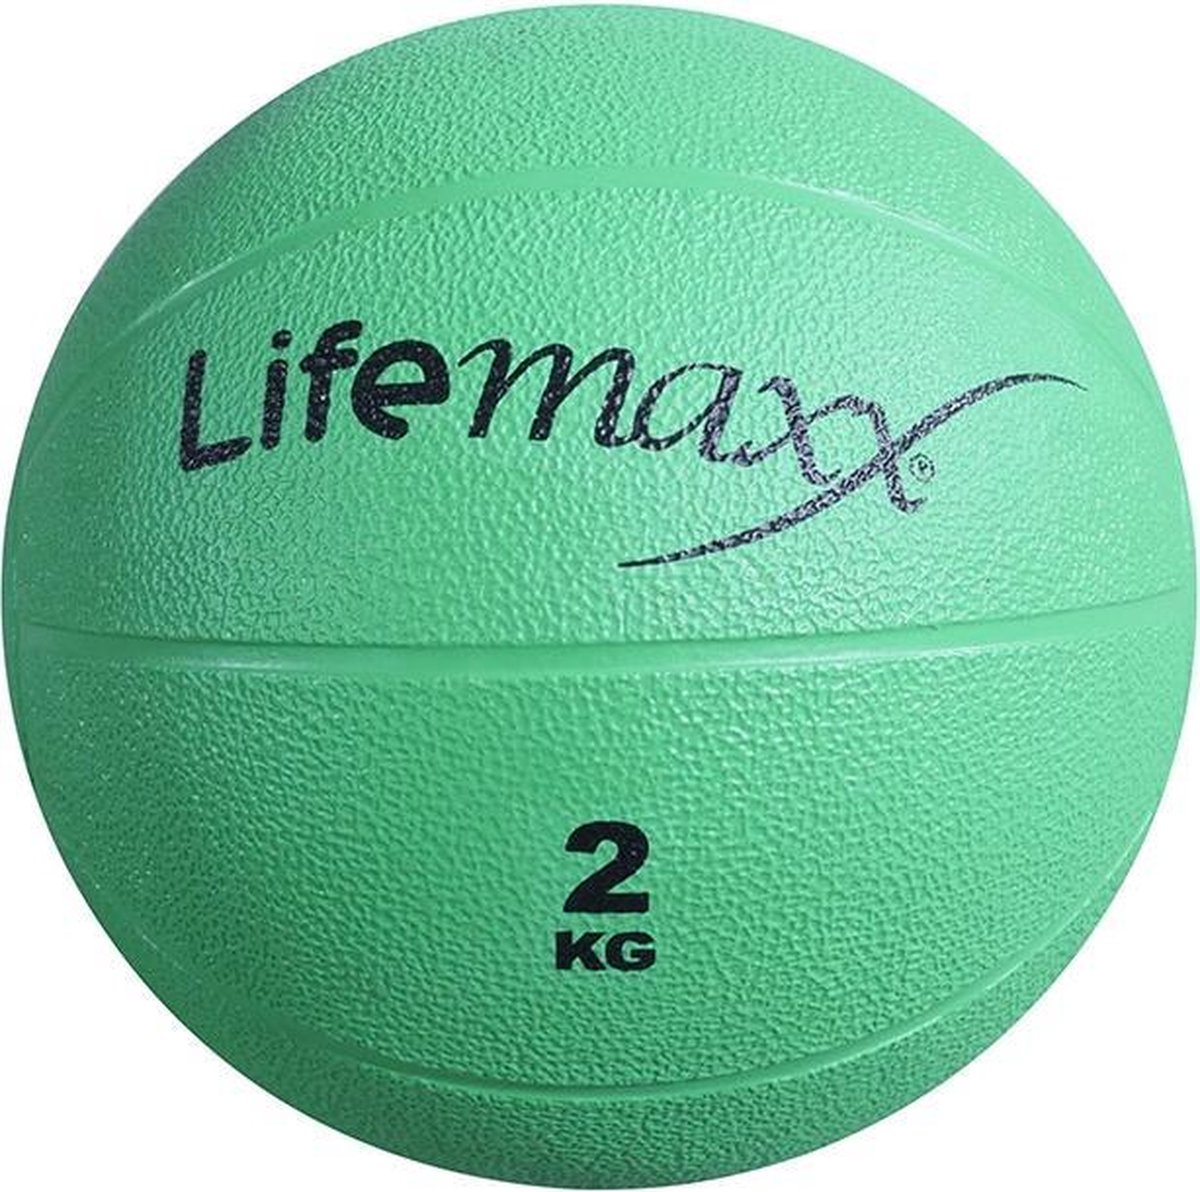 Lifemaxx® Medicine ball 2 kg